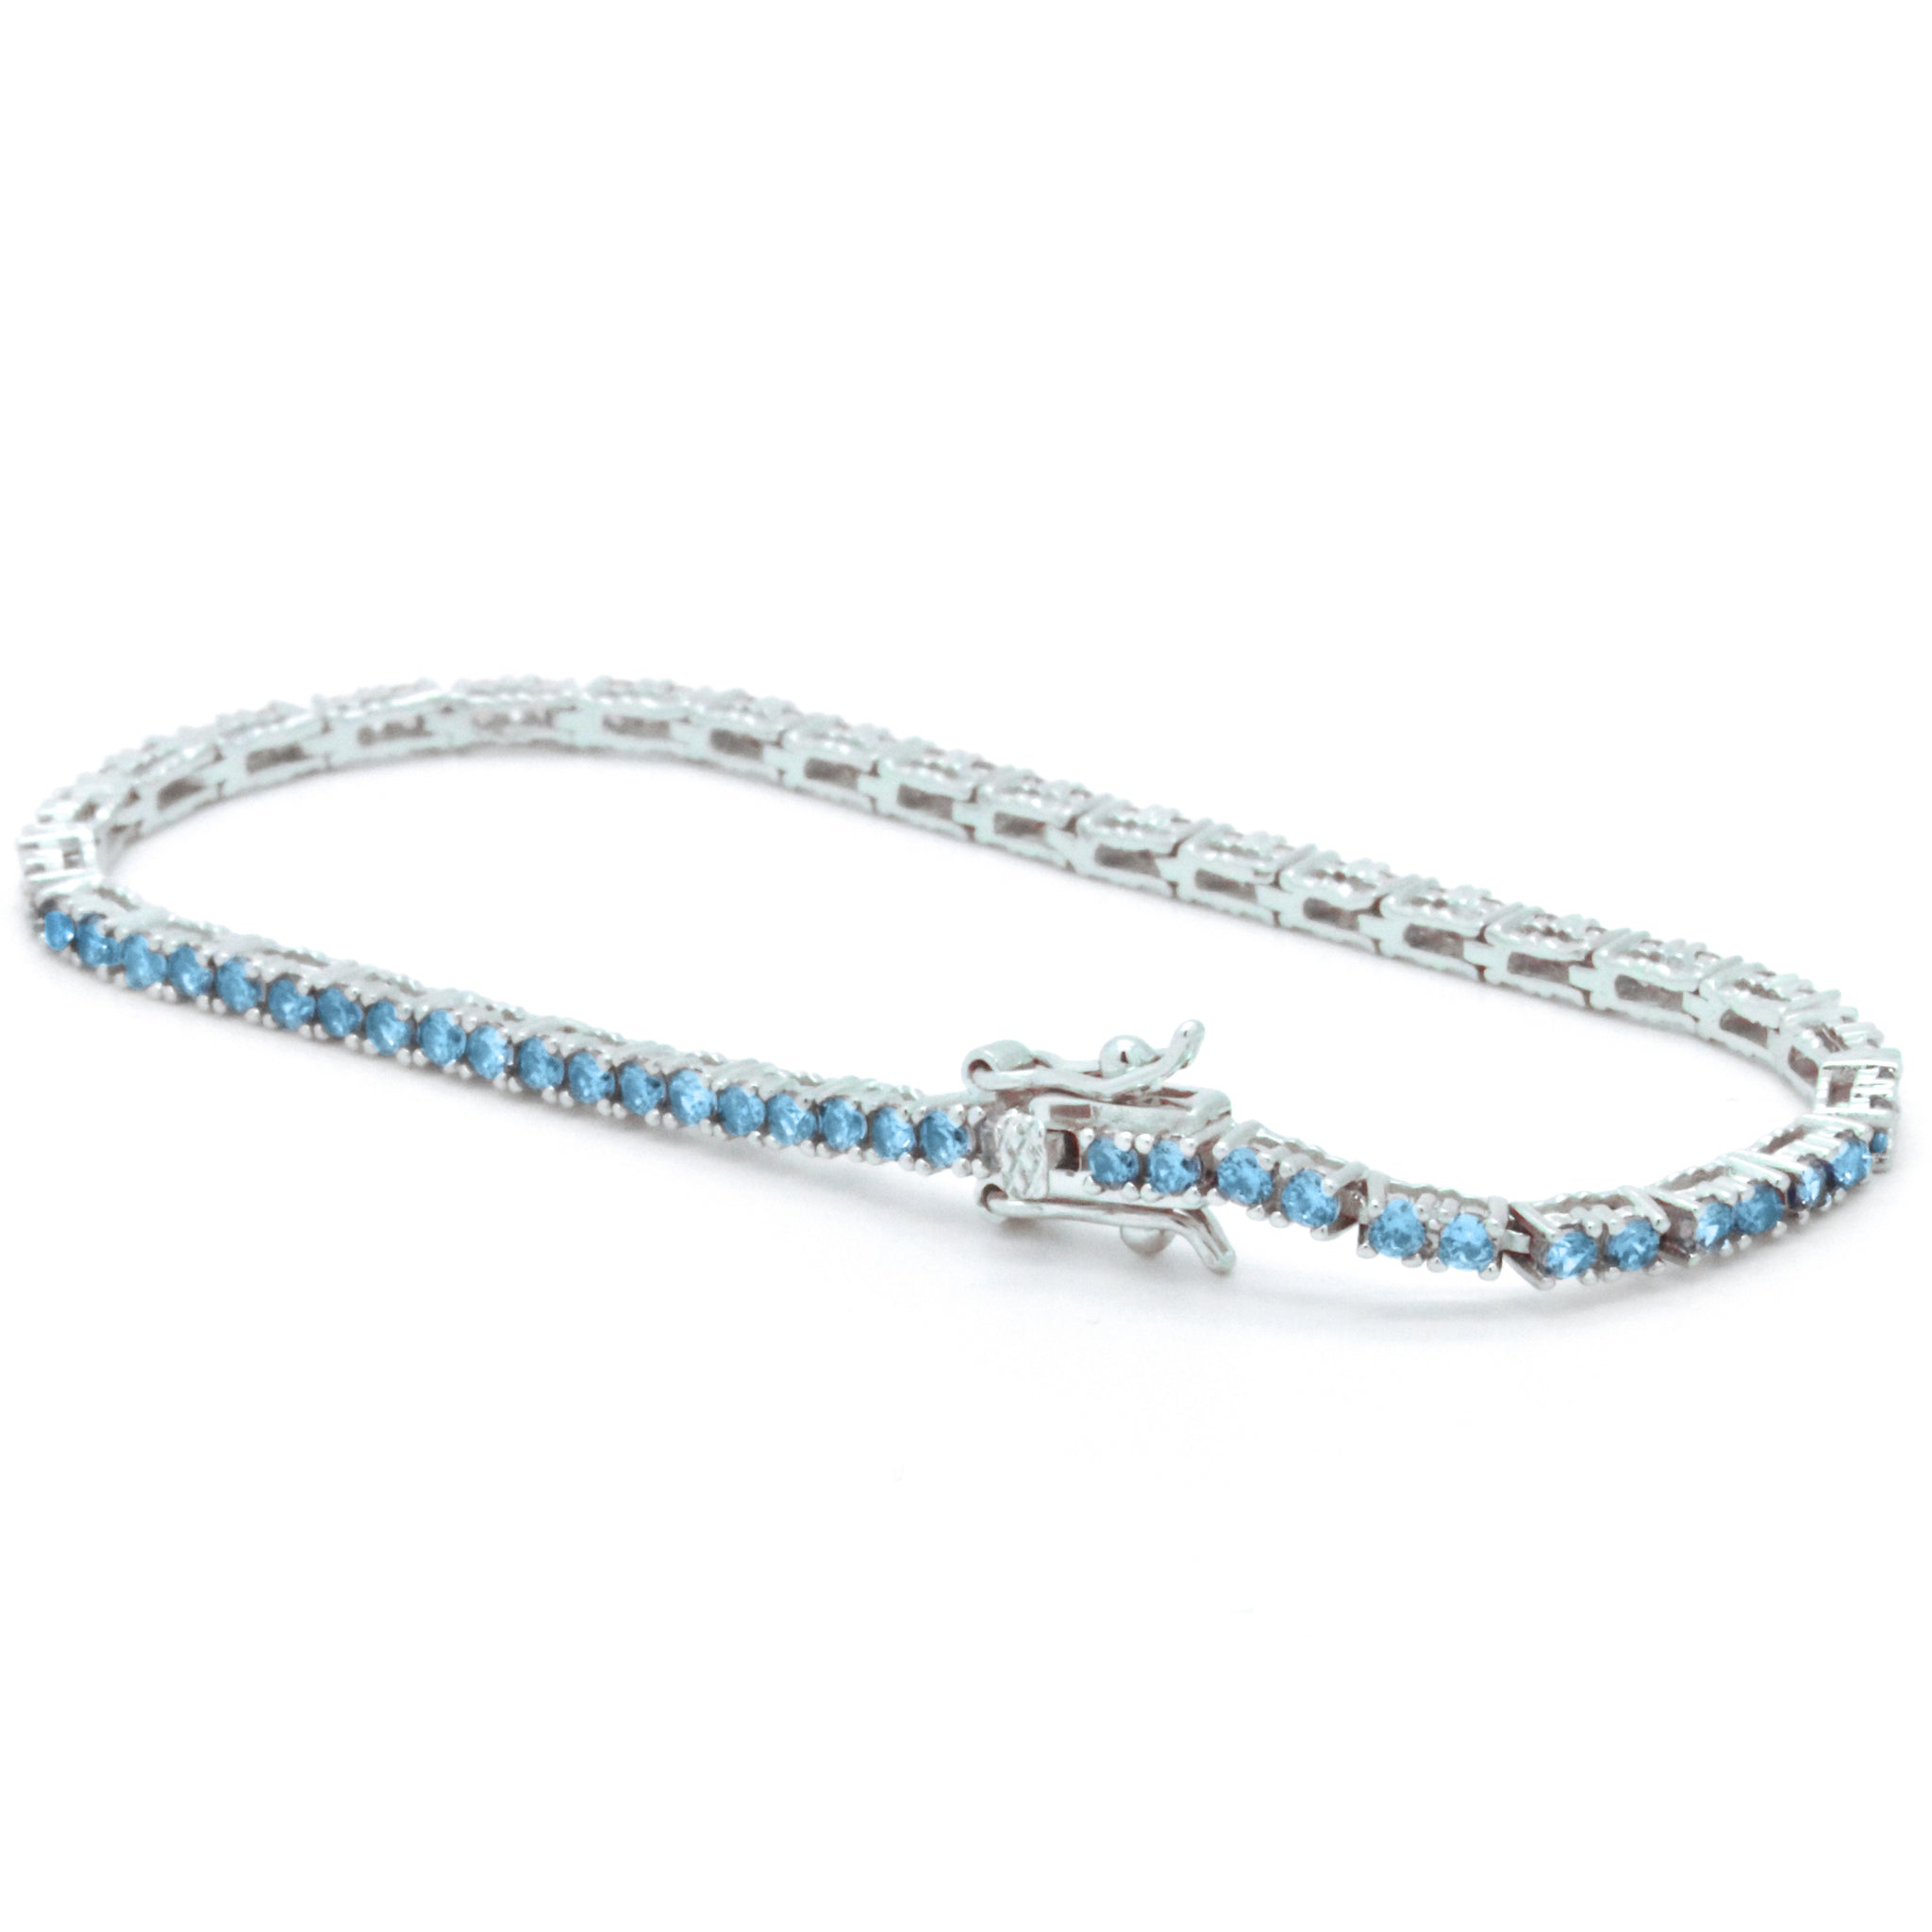 Aquamarine and pave diamond bracelet | Gifted Unique